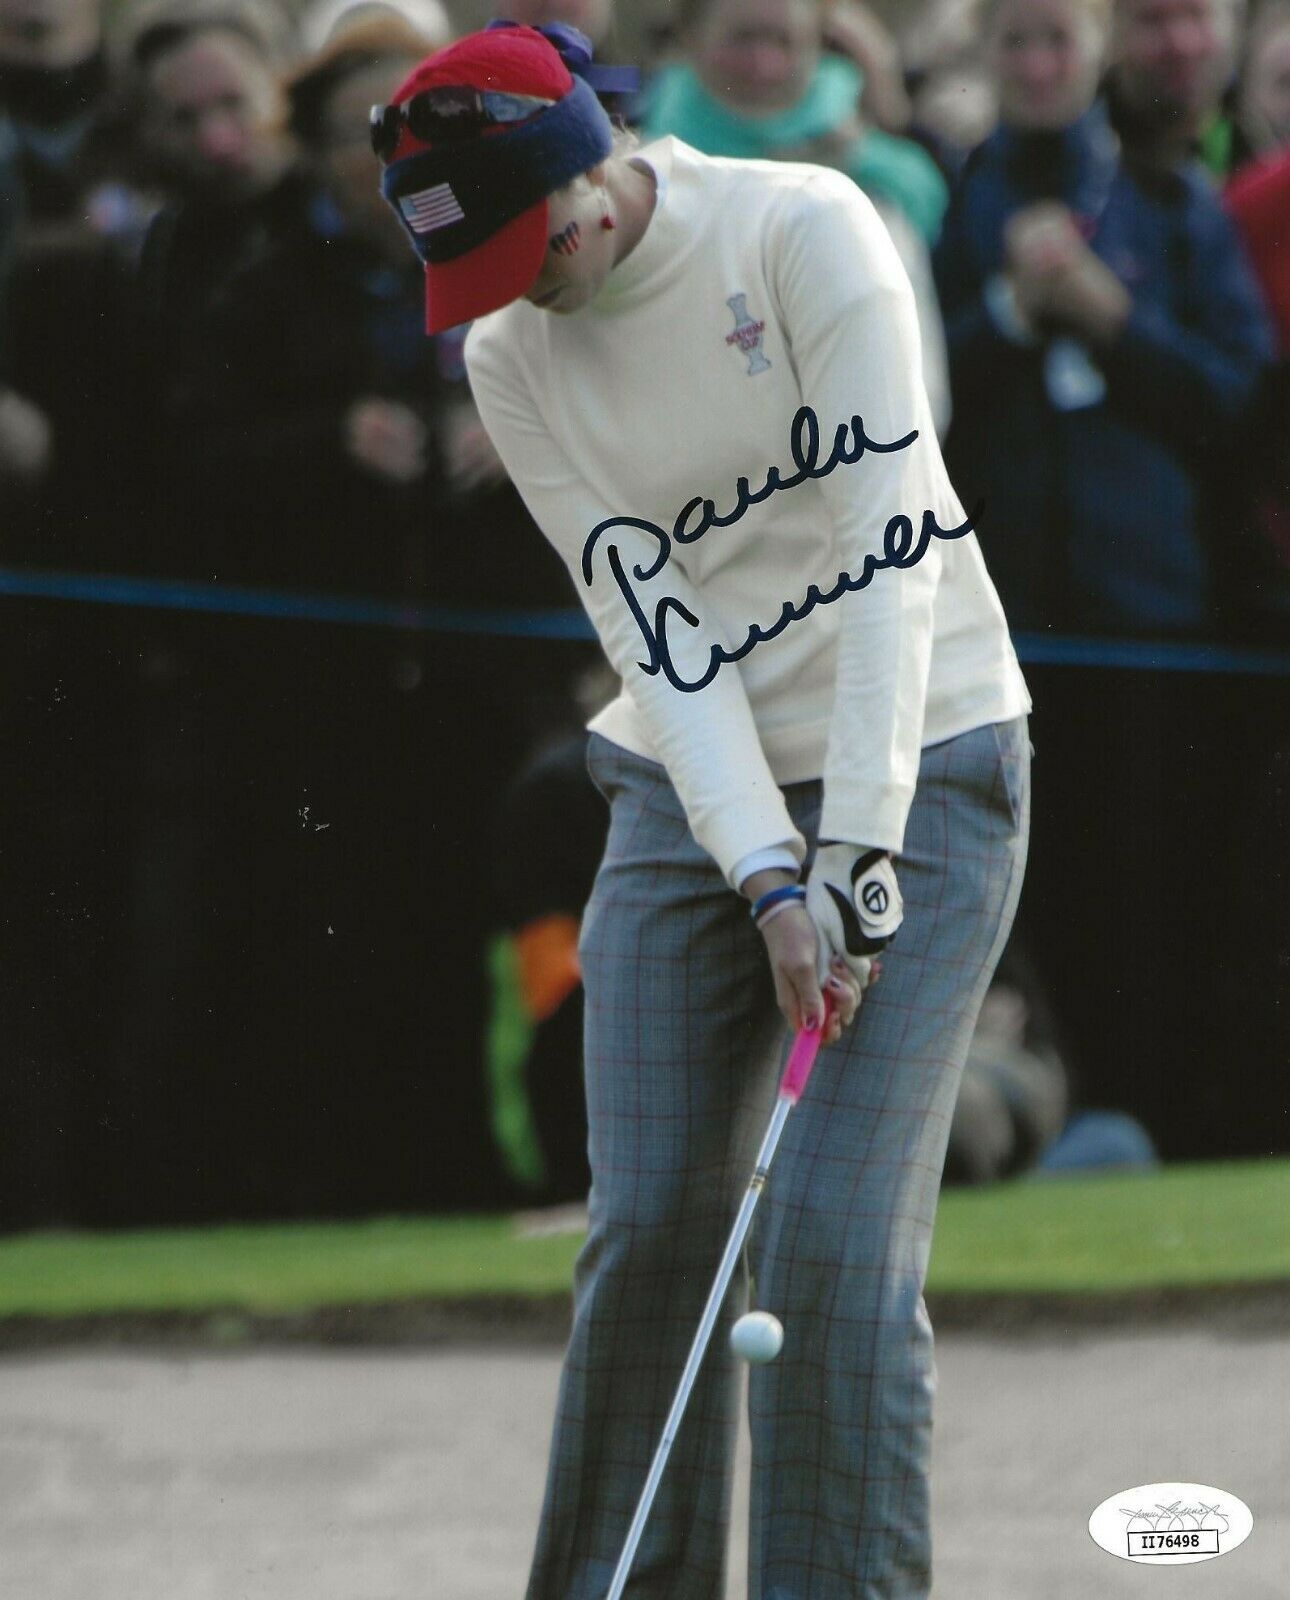 Paula Creamer Signed LPGA Golf 8x10 Photo Autographed Solheim Cup Team